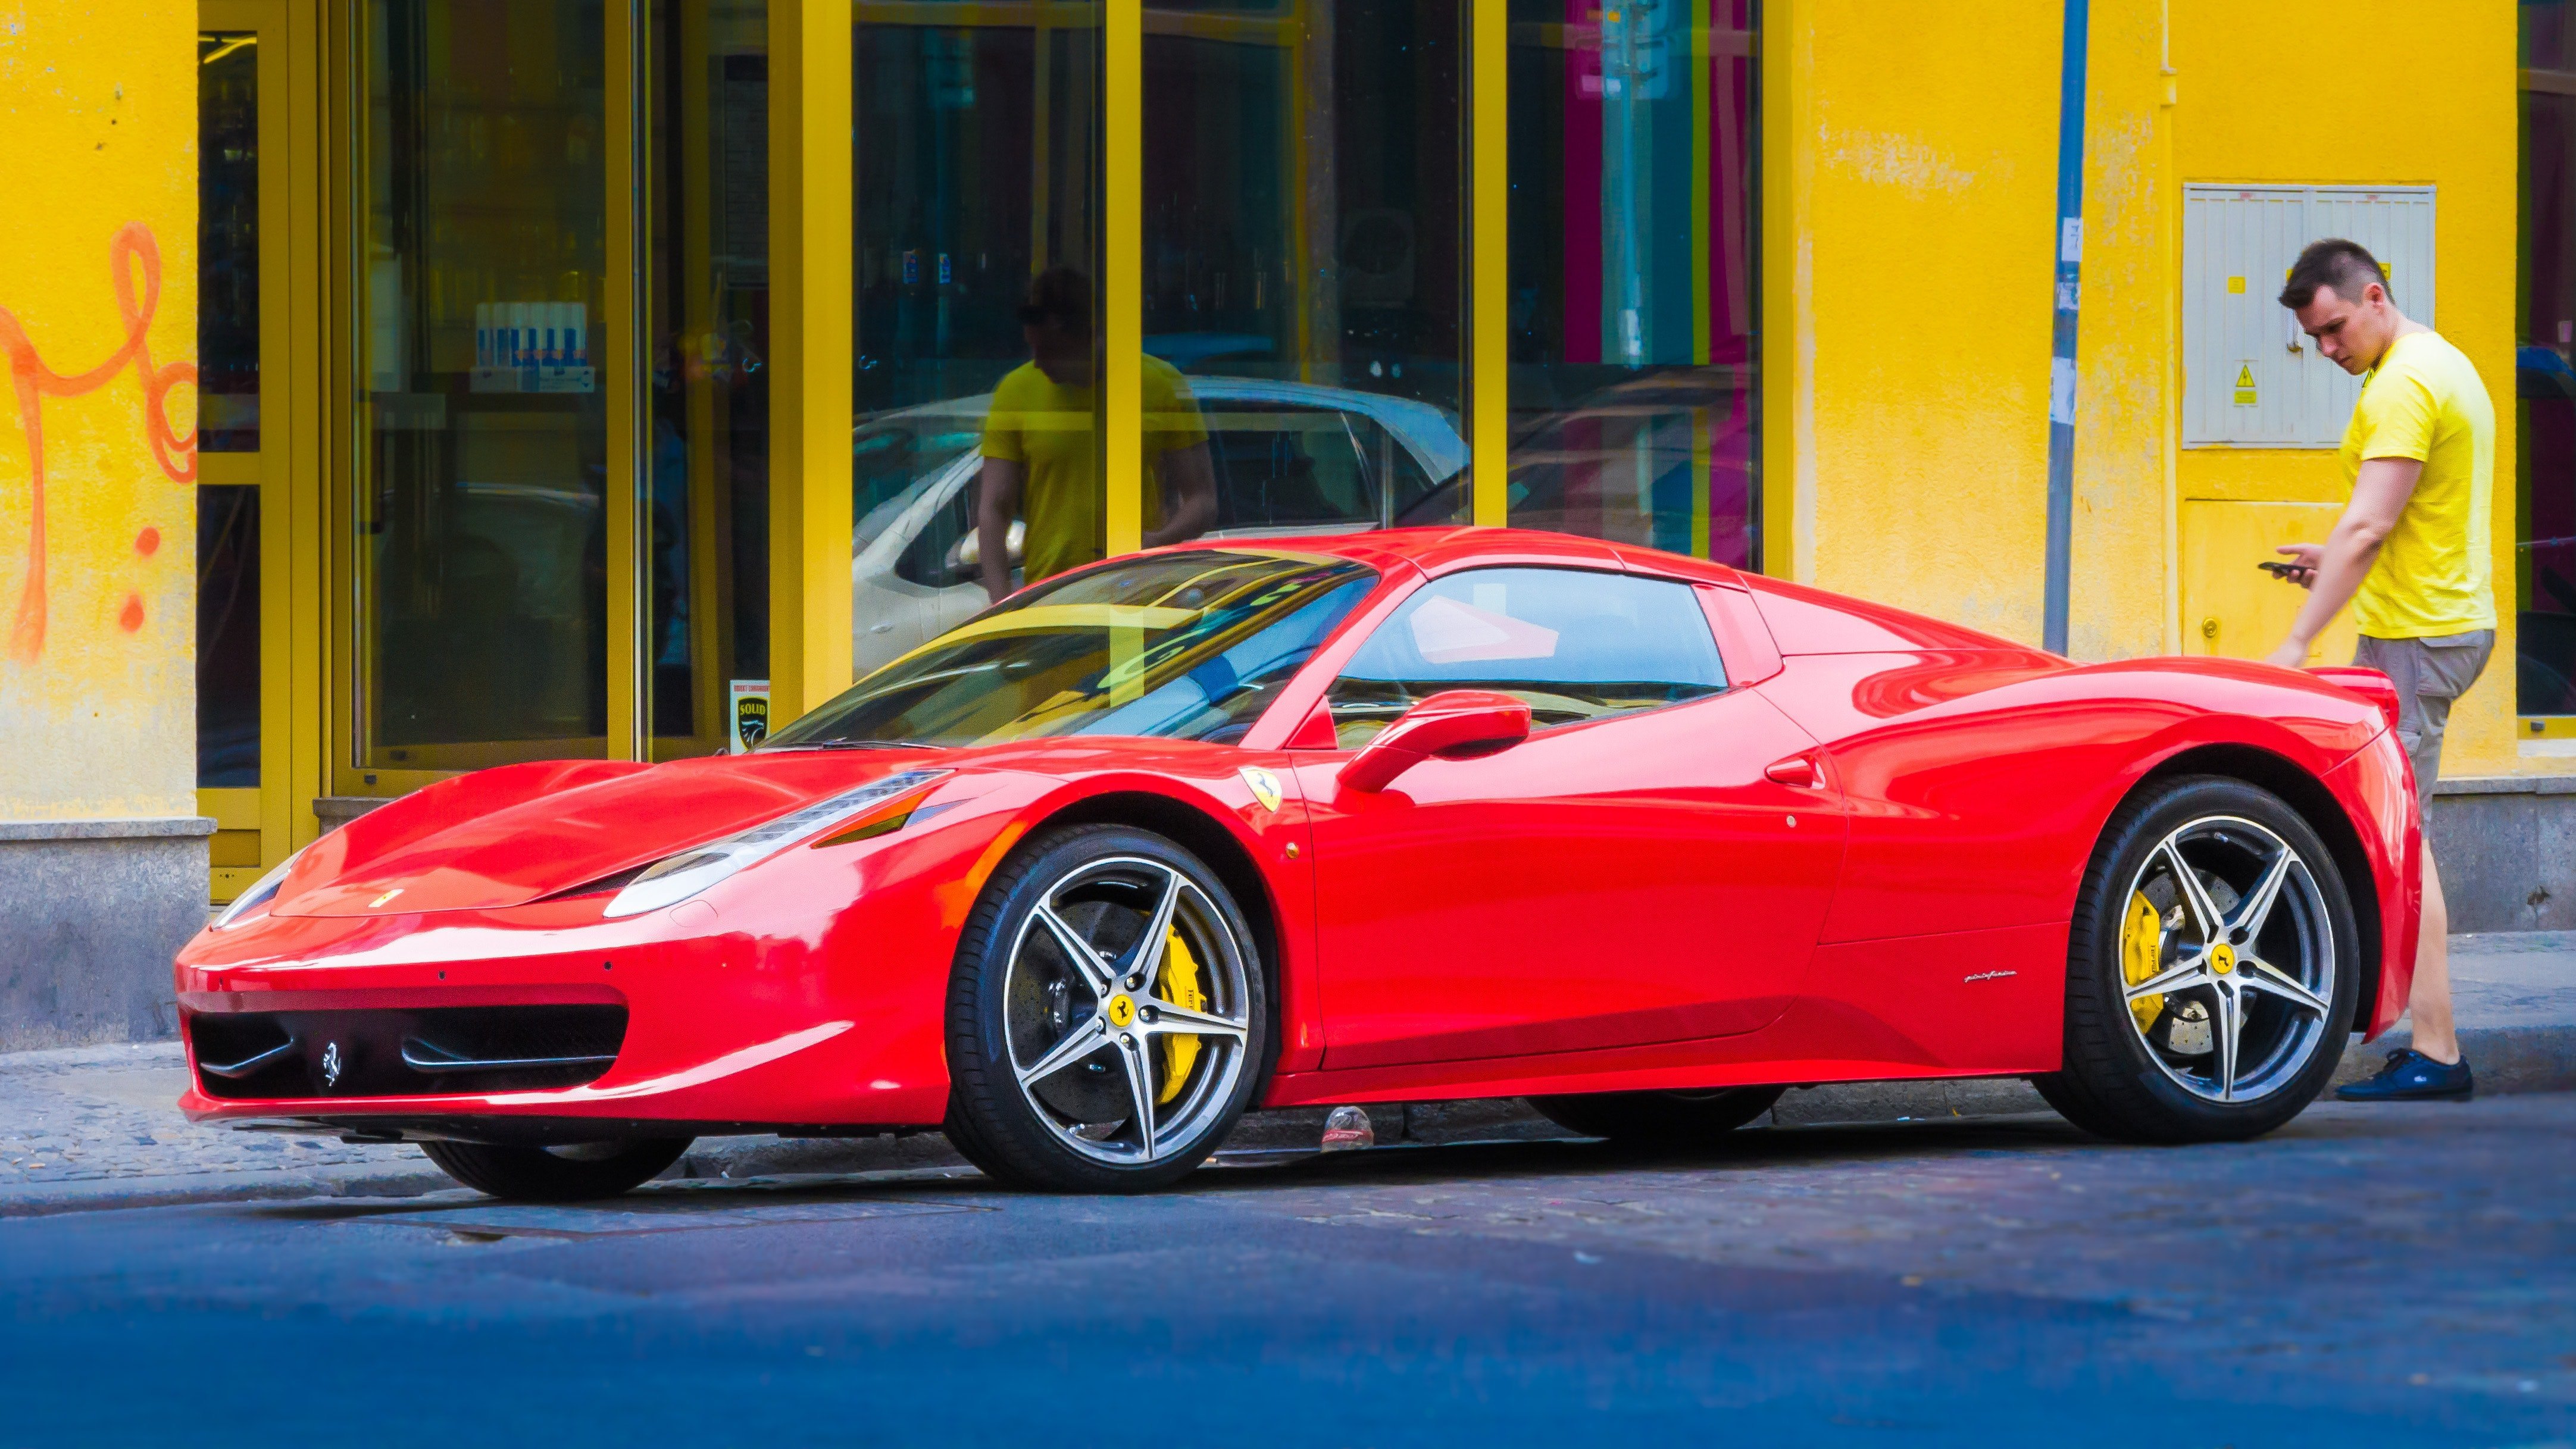 Red Ferrari on a street. | Source: Pixabay